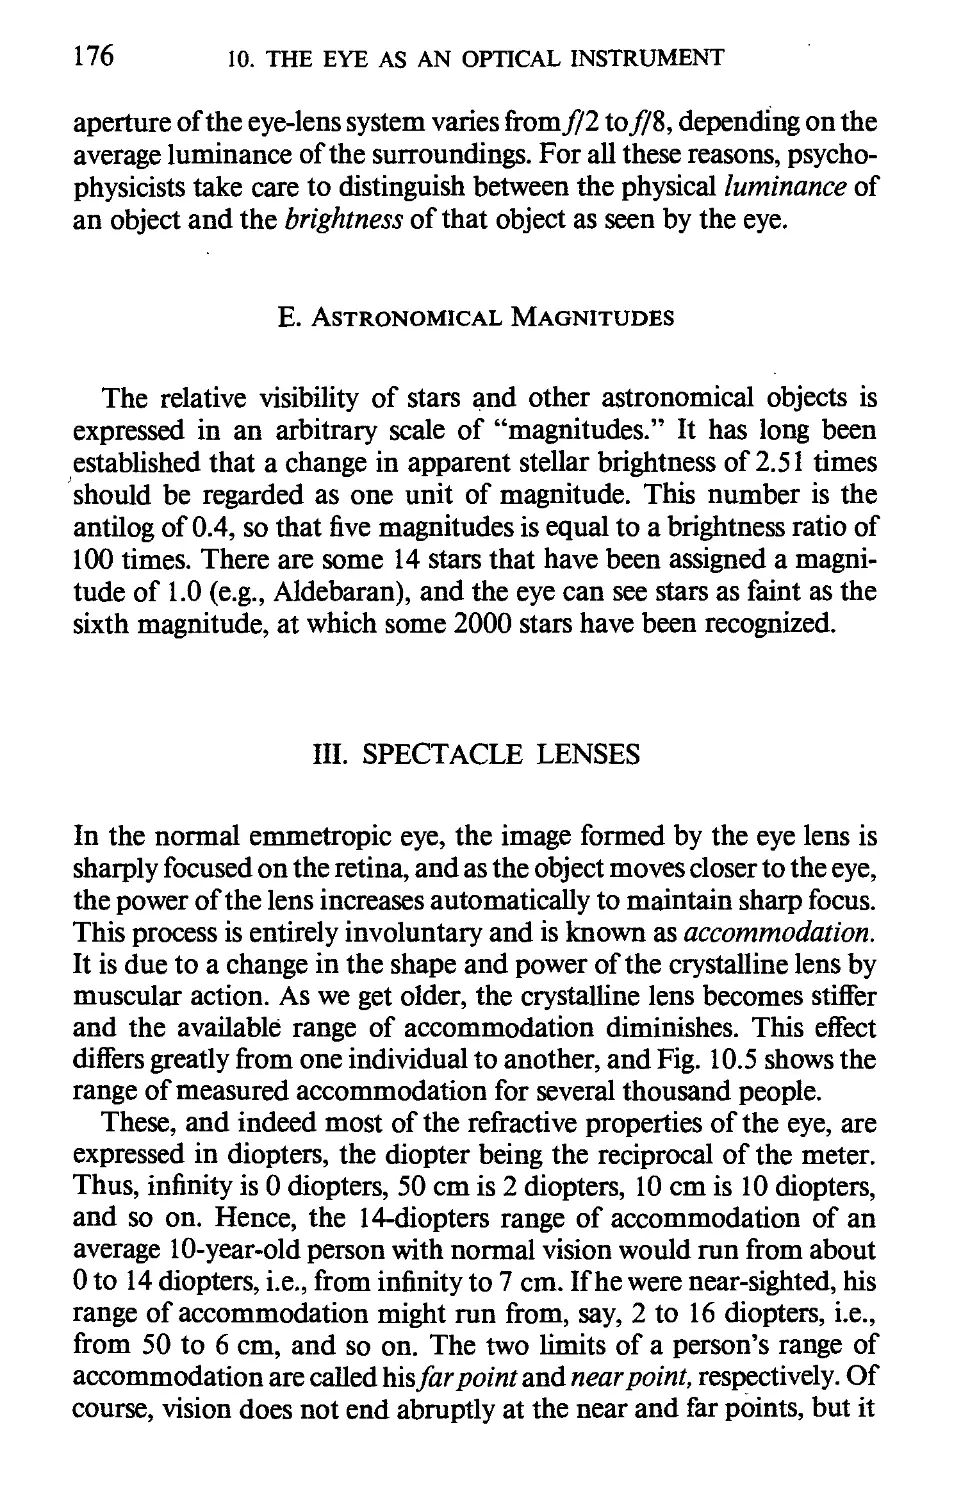 E. Astronomical Magnitudes
III. Spectacle Lenses